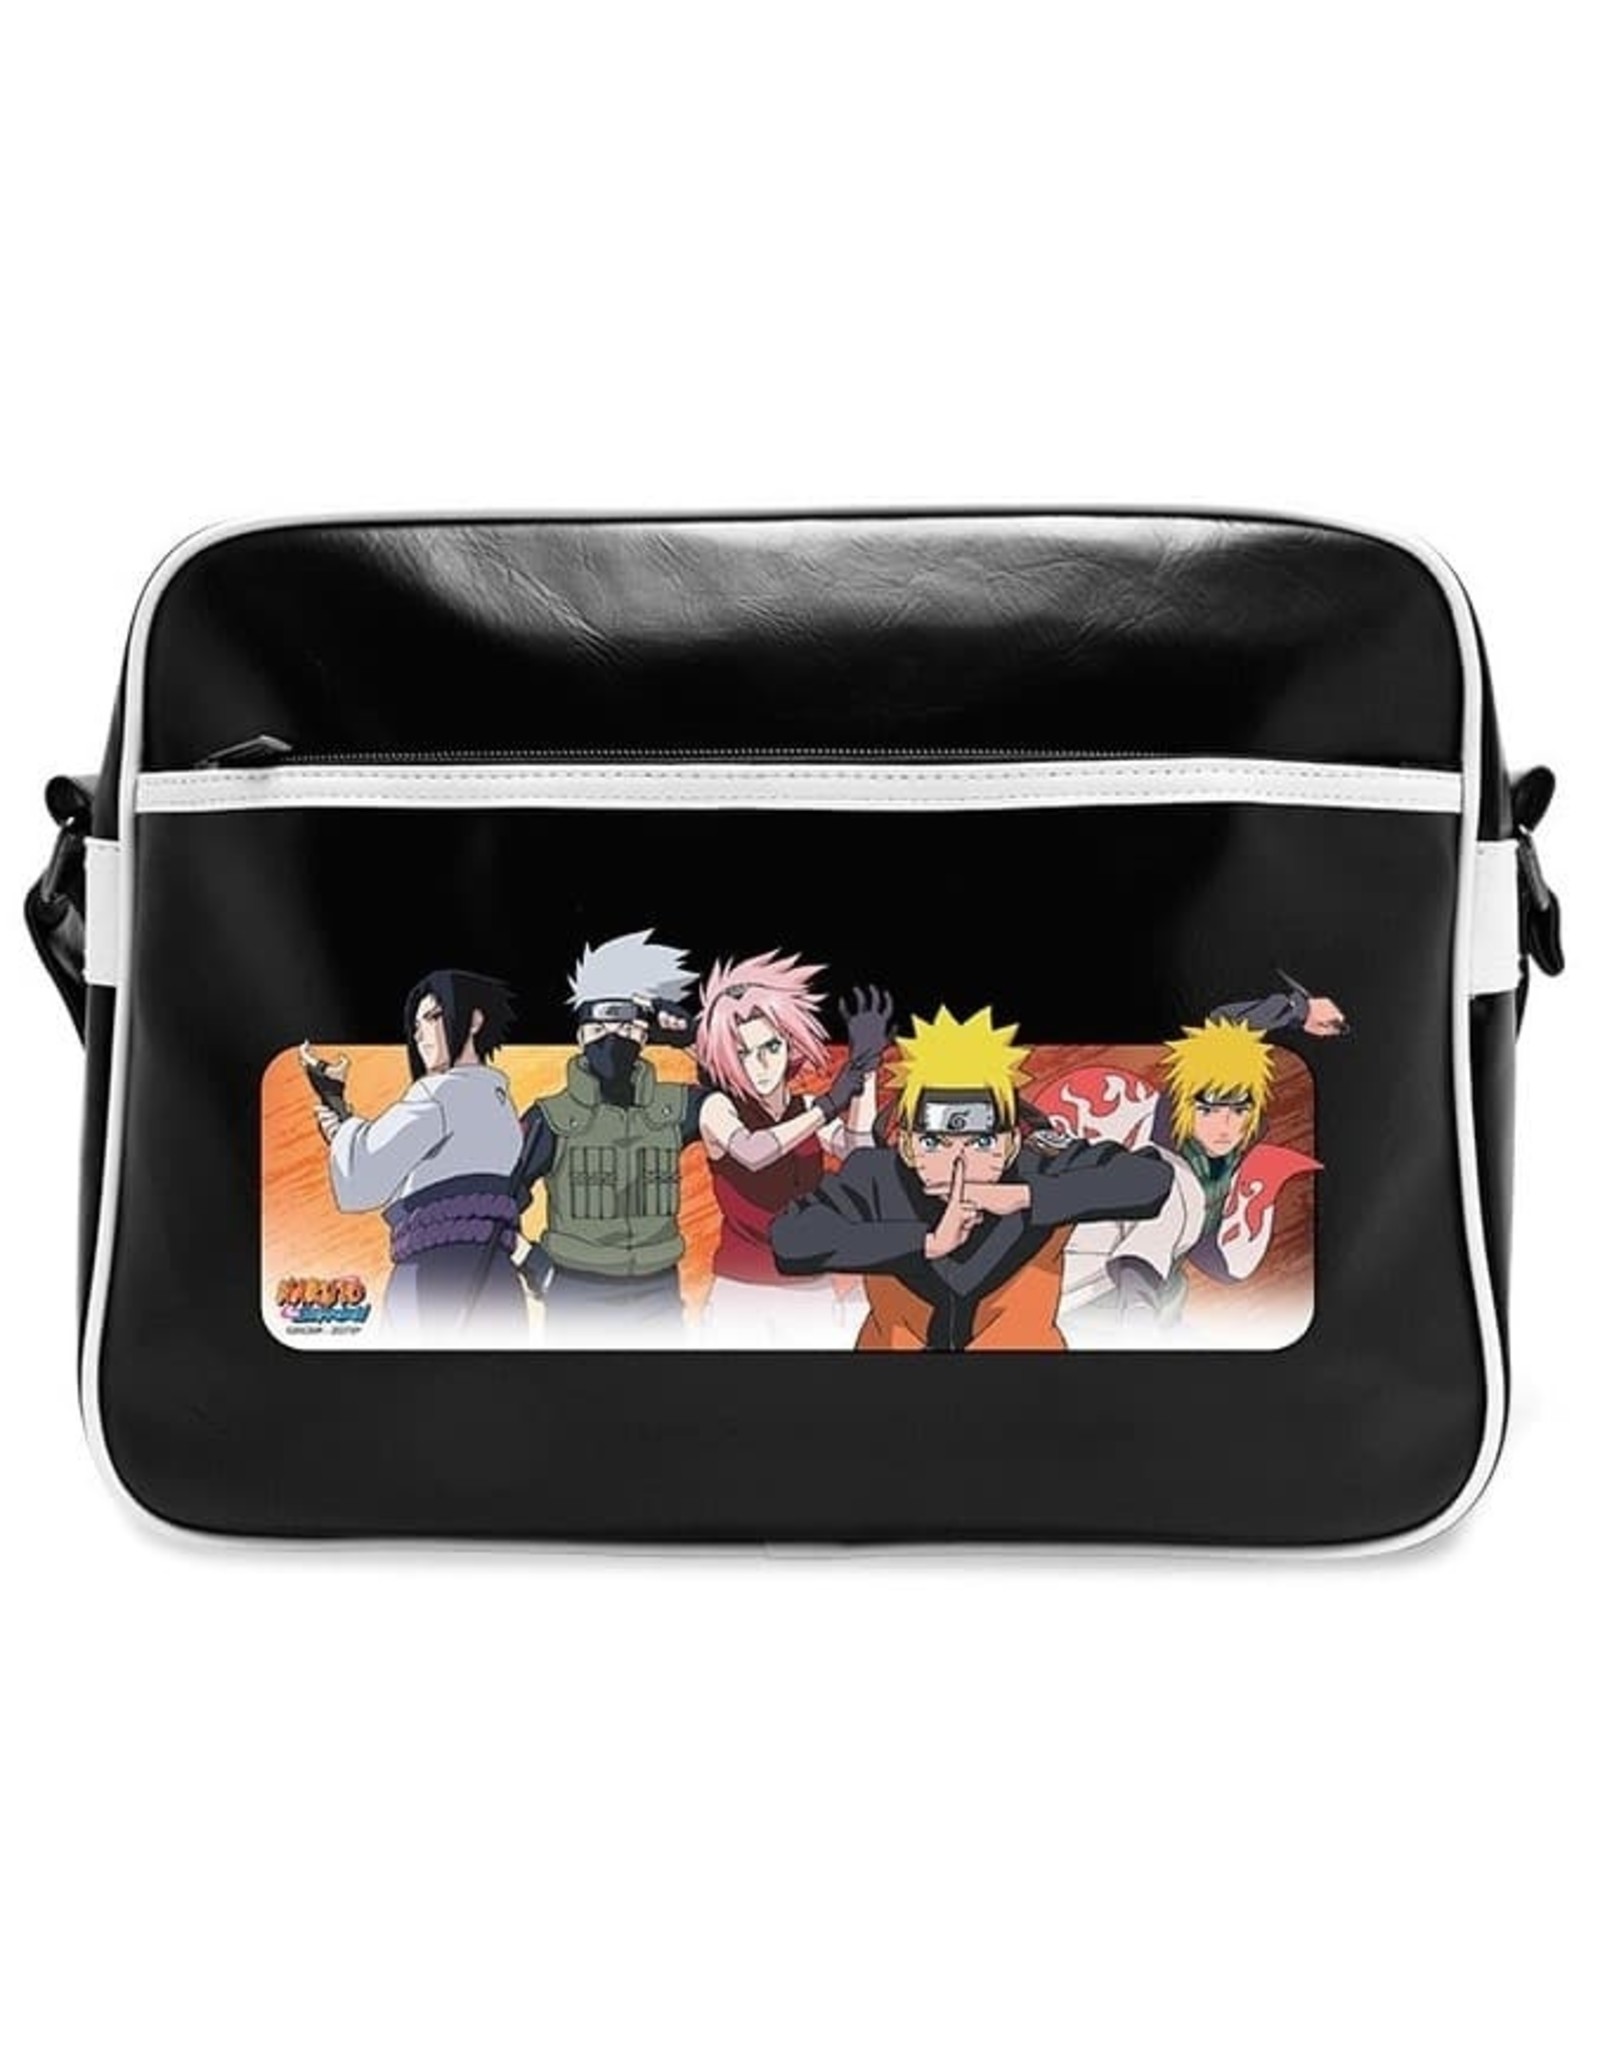 Naruto Shippuden Merchandise bags - Naruto Shippuden Good Guys messenger bag